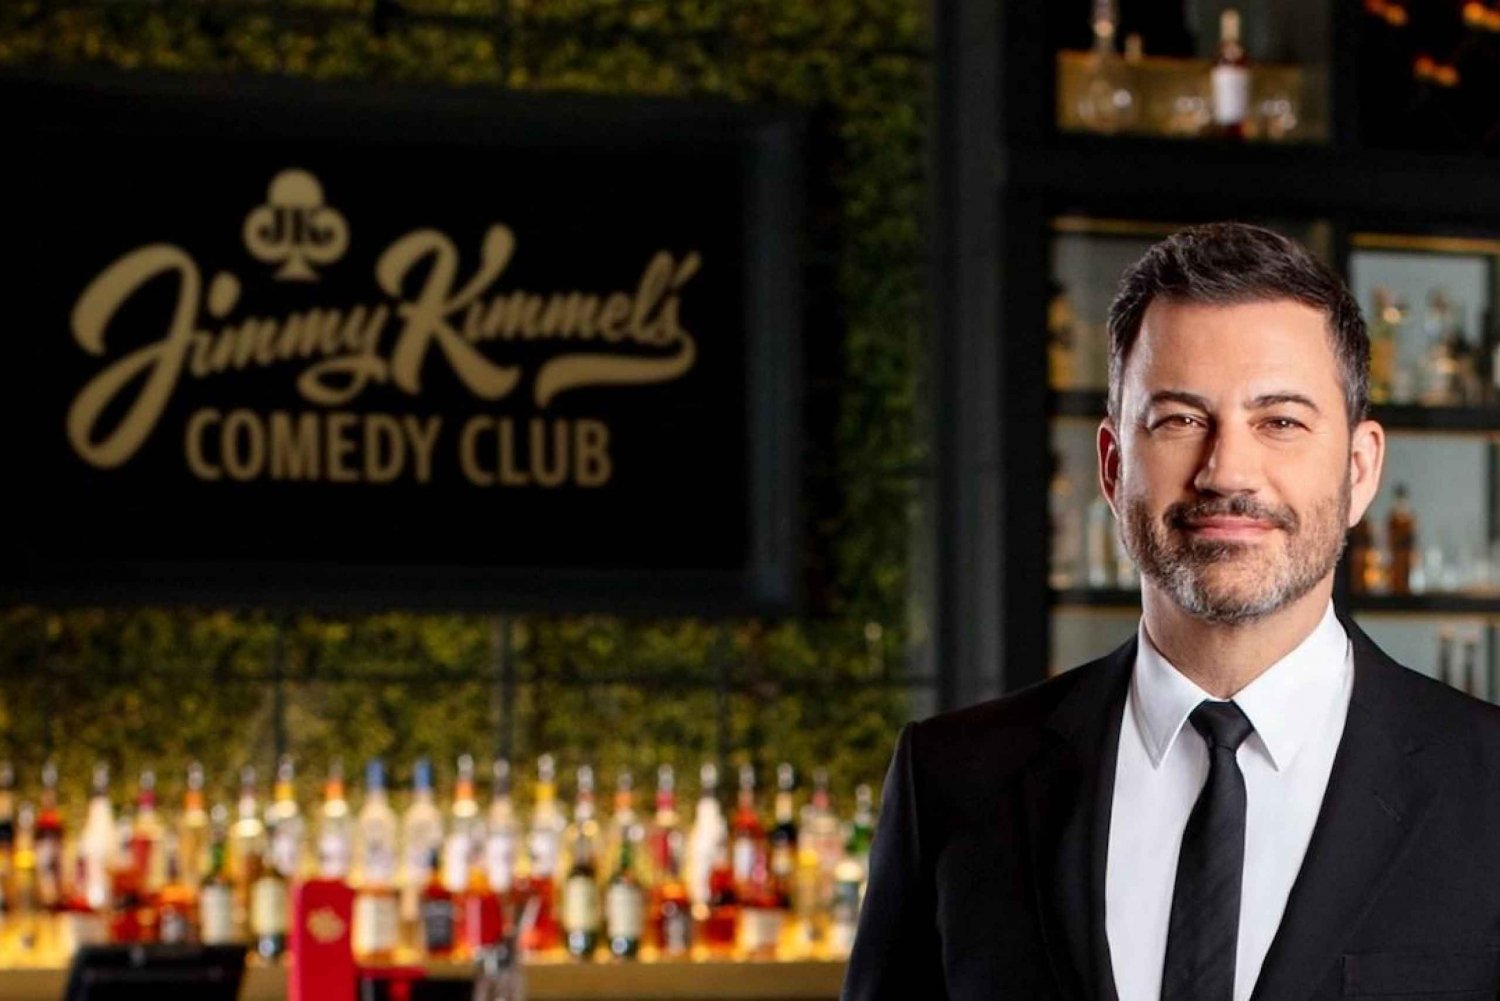 Las Vegas: Jimmy Kimmel's Comedy Club